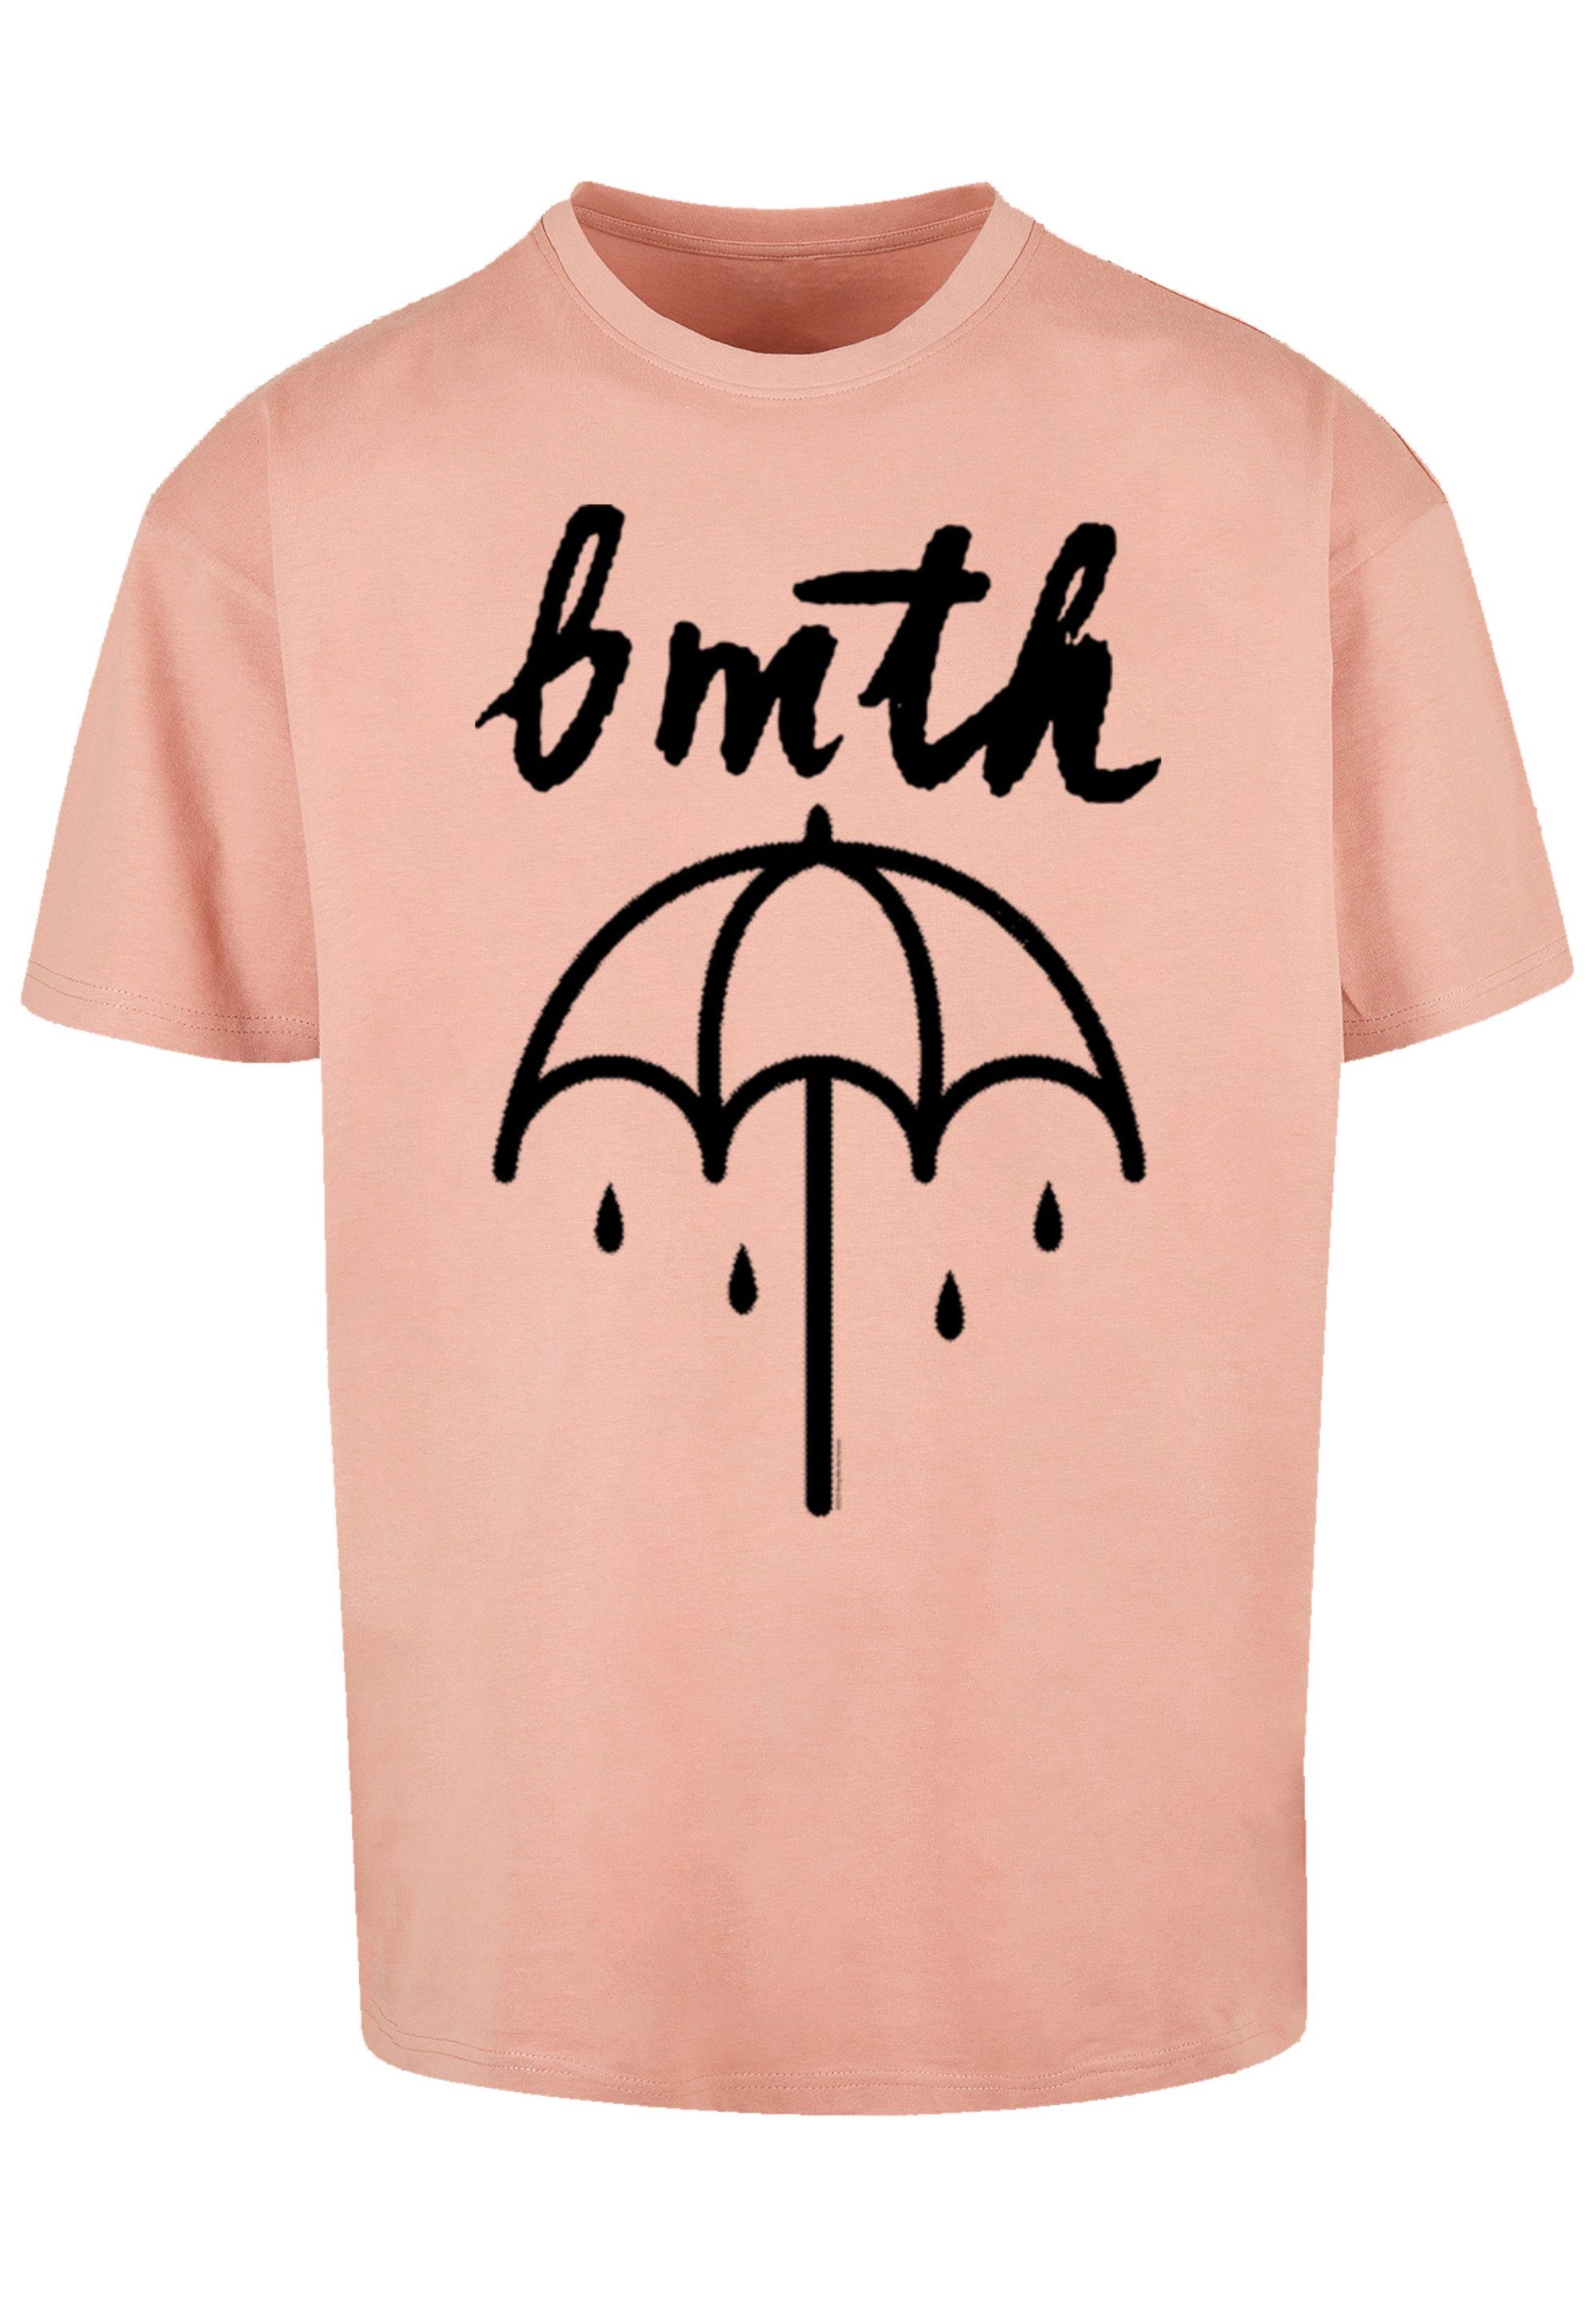 amber T-Shirt BMTH F4NT4STIC Metal Rock-Musik, Premium Umbrella Band Qualität, Band